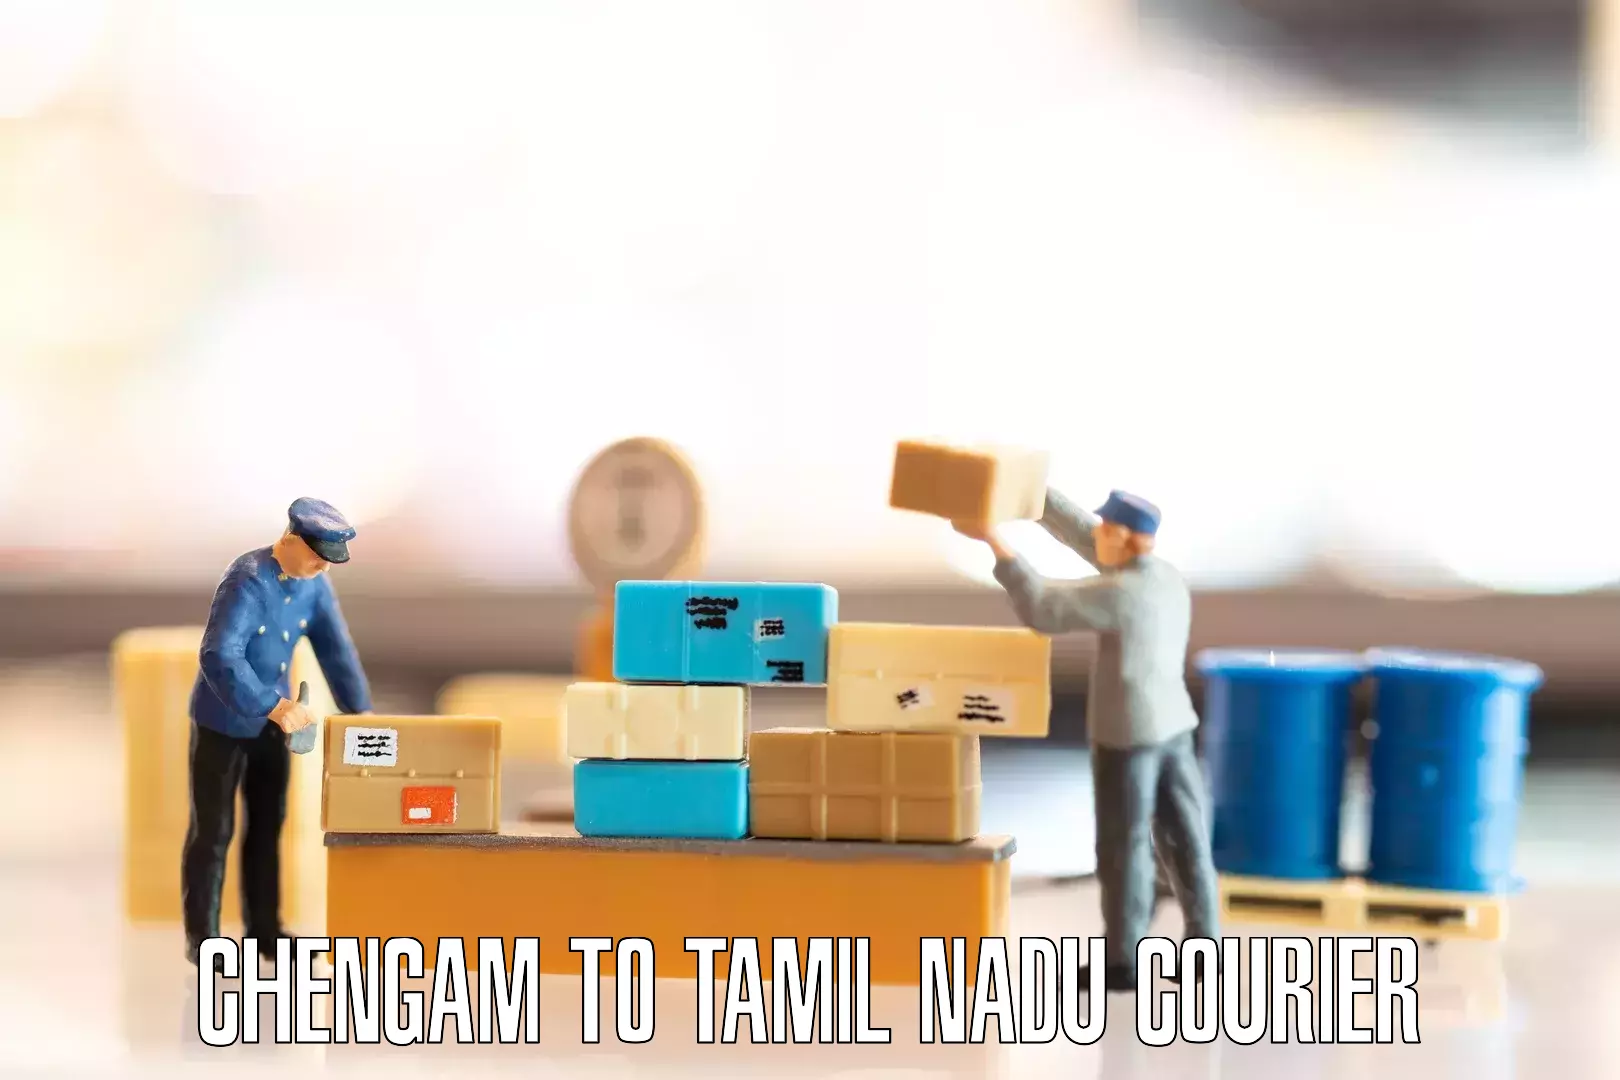 Expert furniture movers Chengam to Tamil Nadu